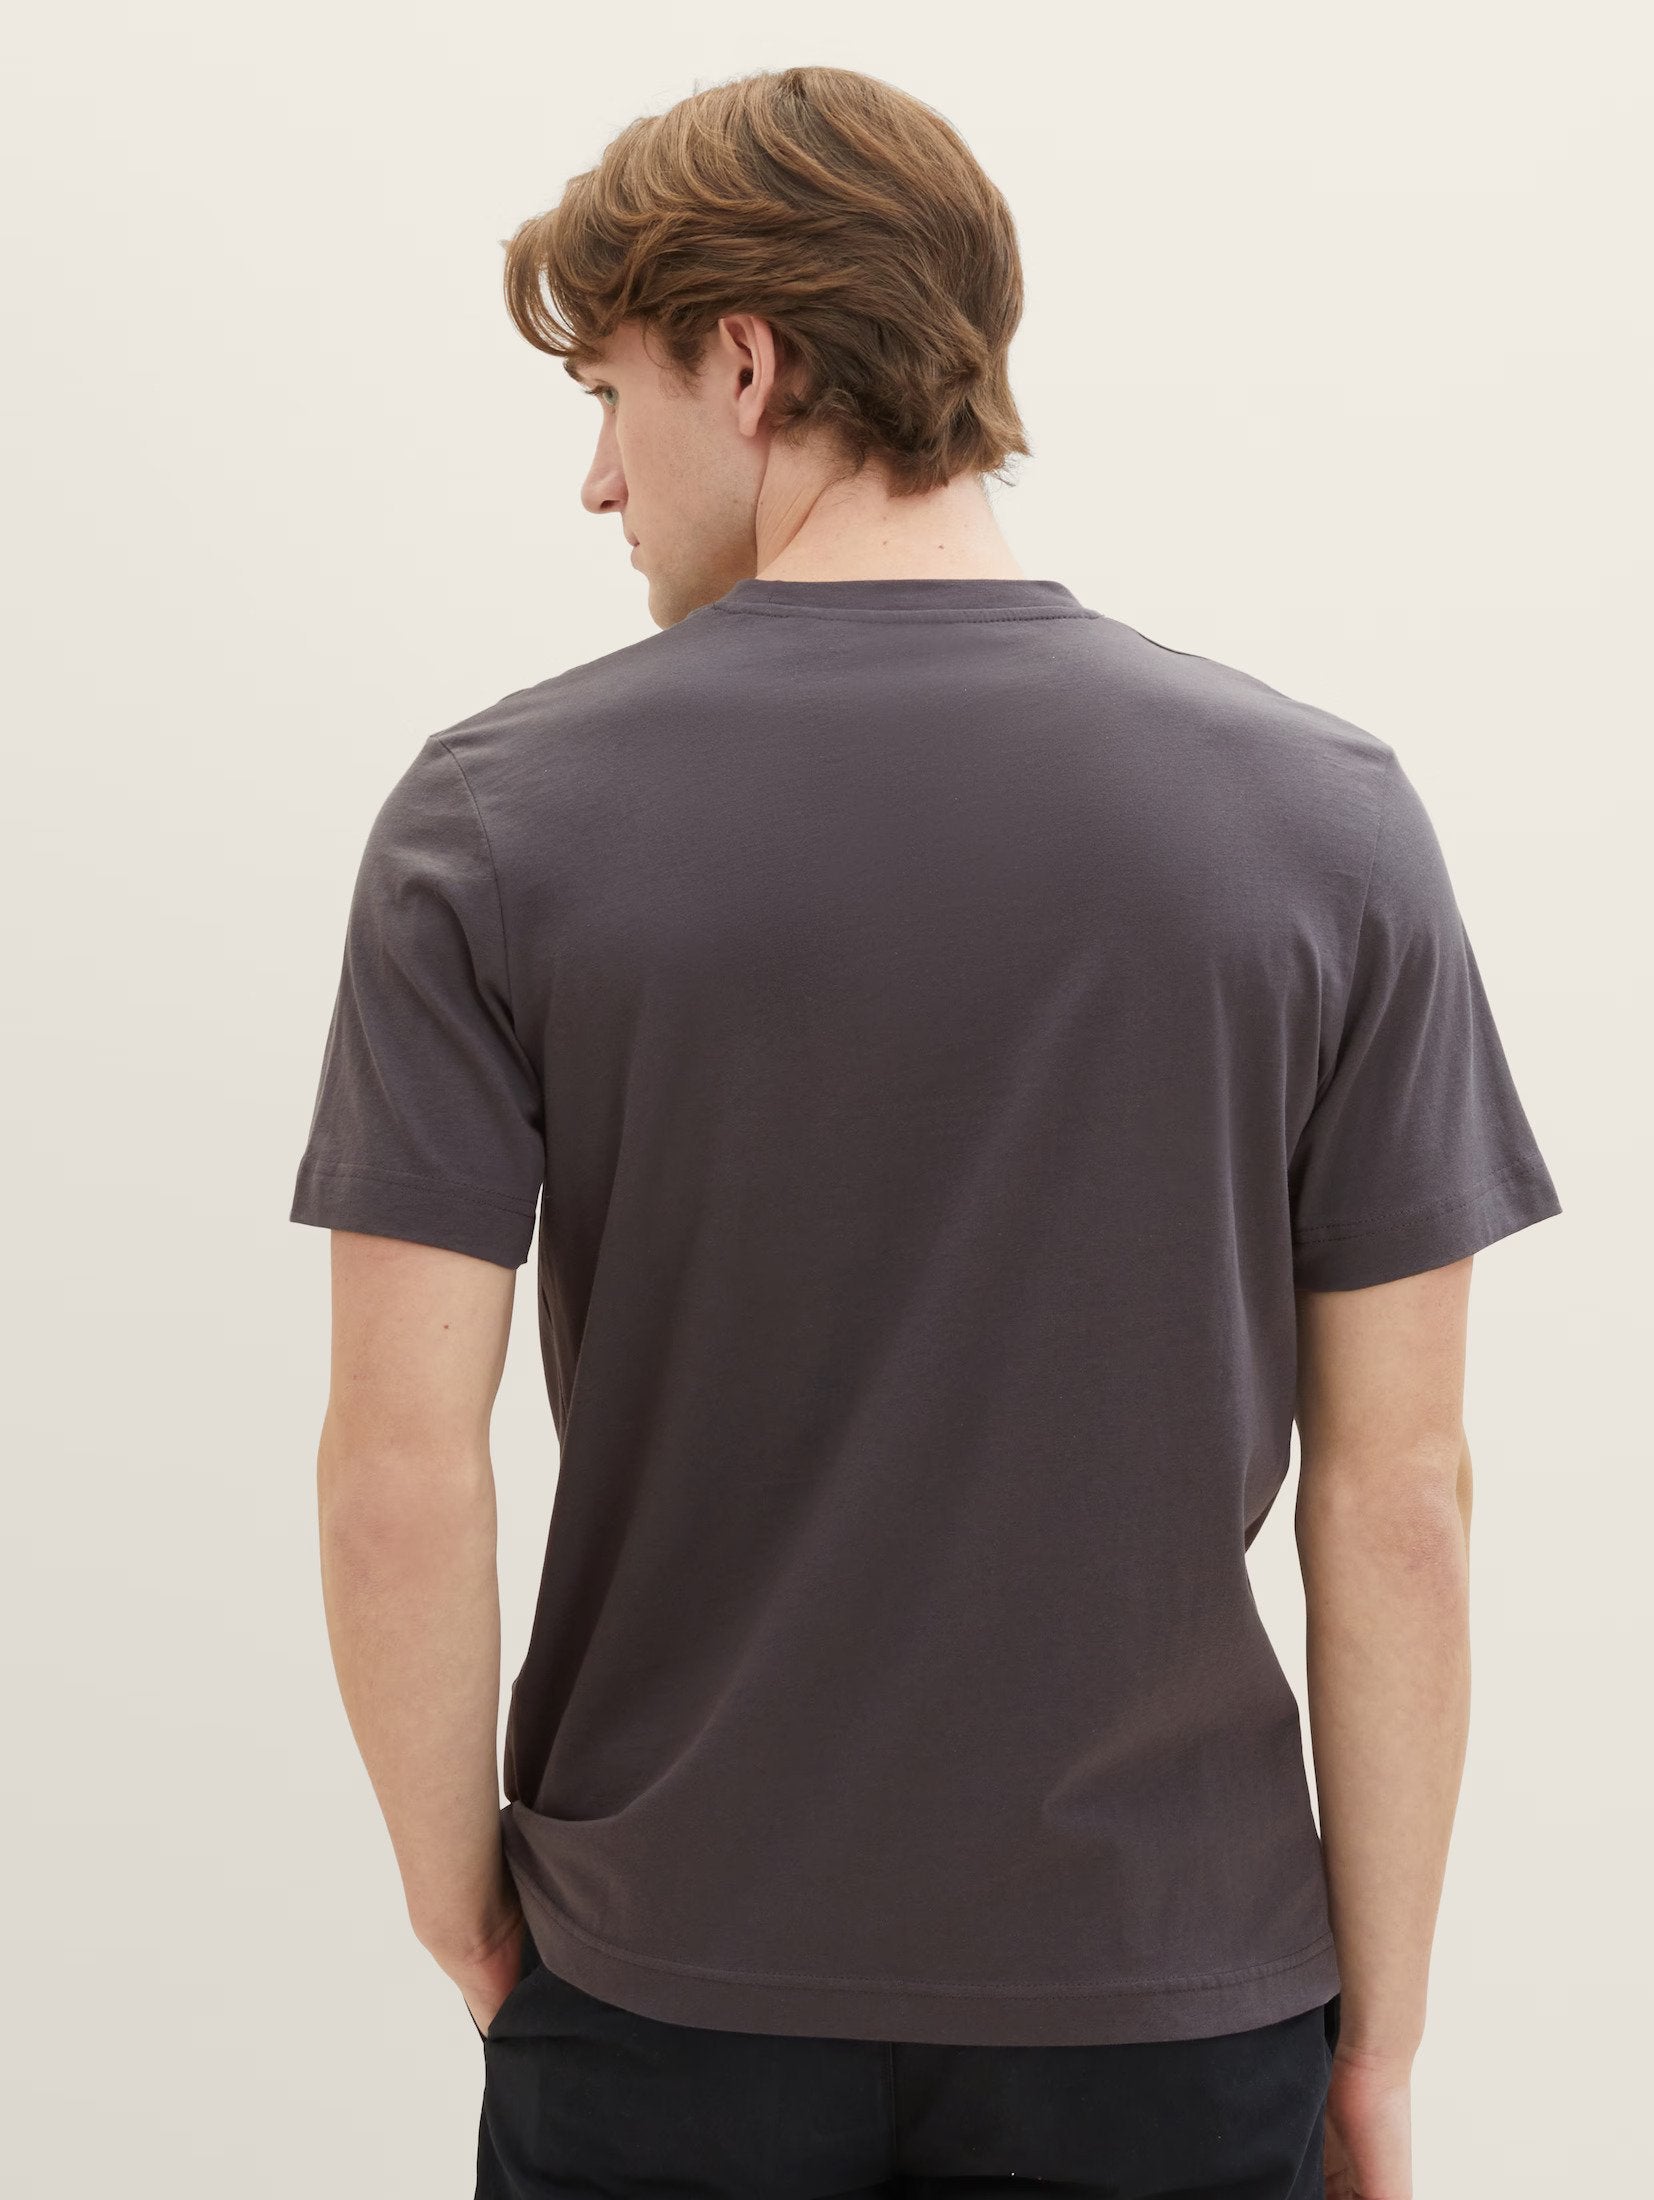 Tom Tailor Tarmac Grey T-Shirt with Polo Print